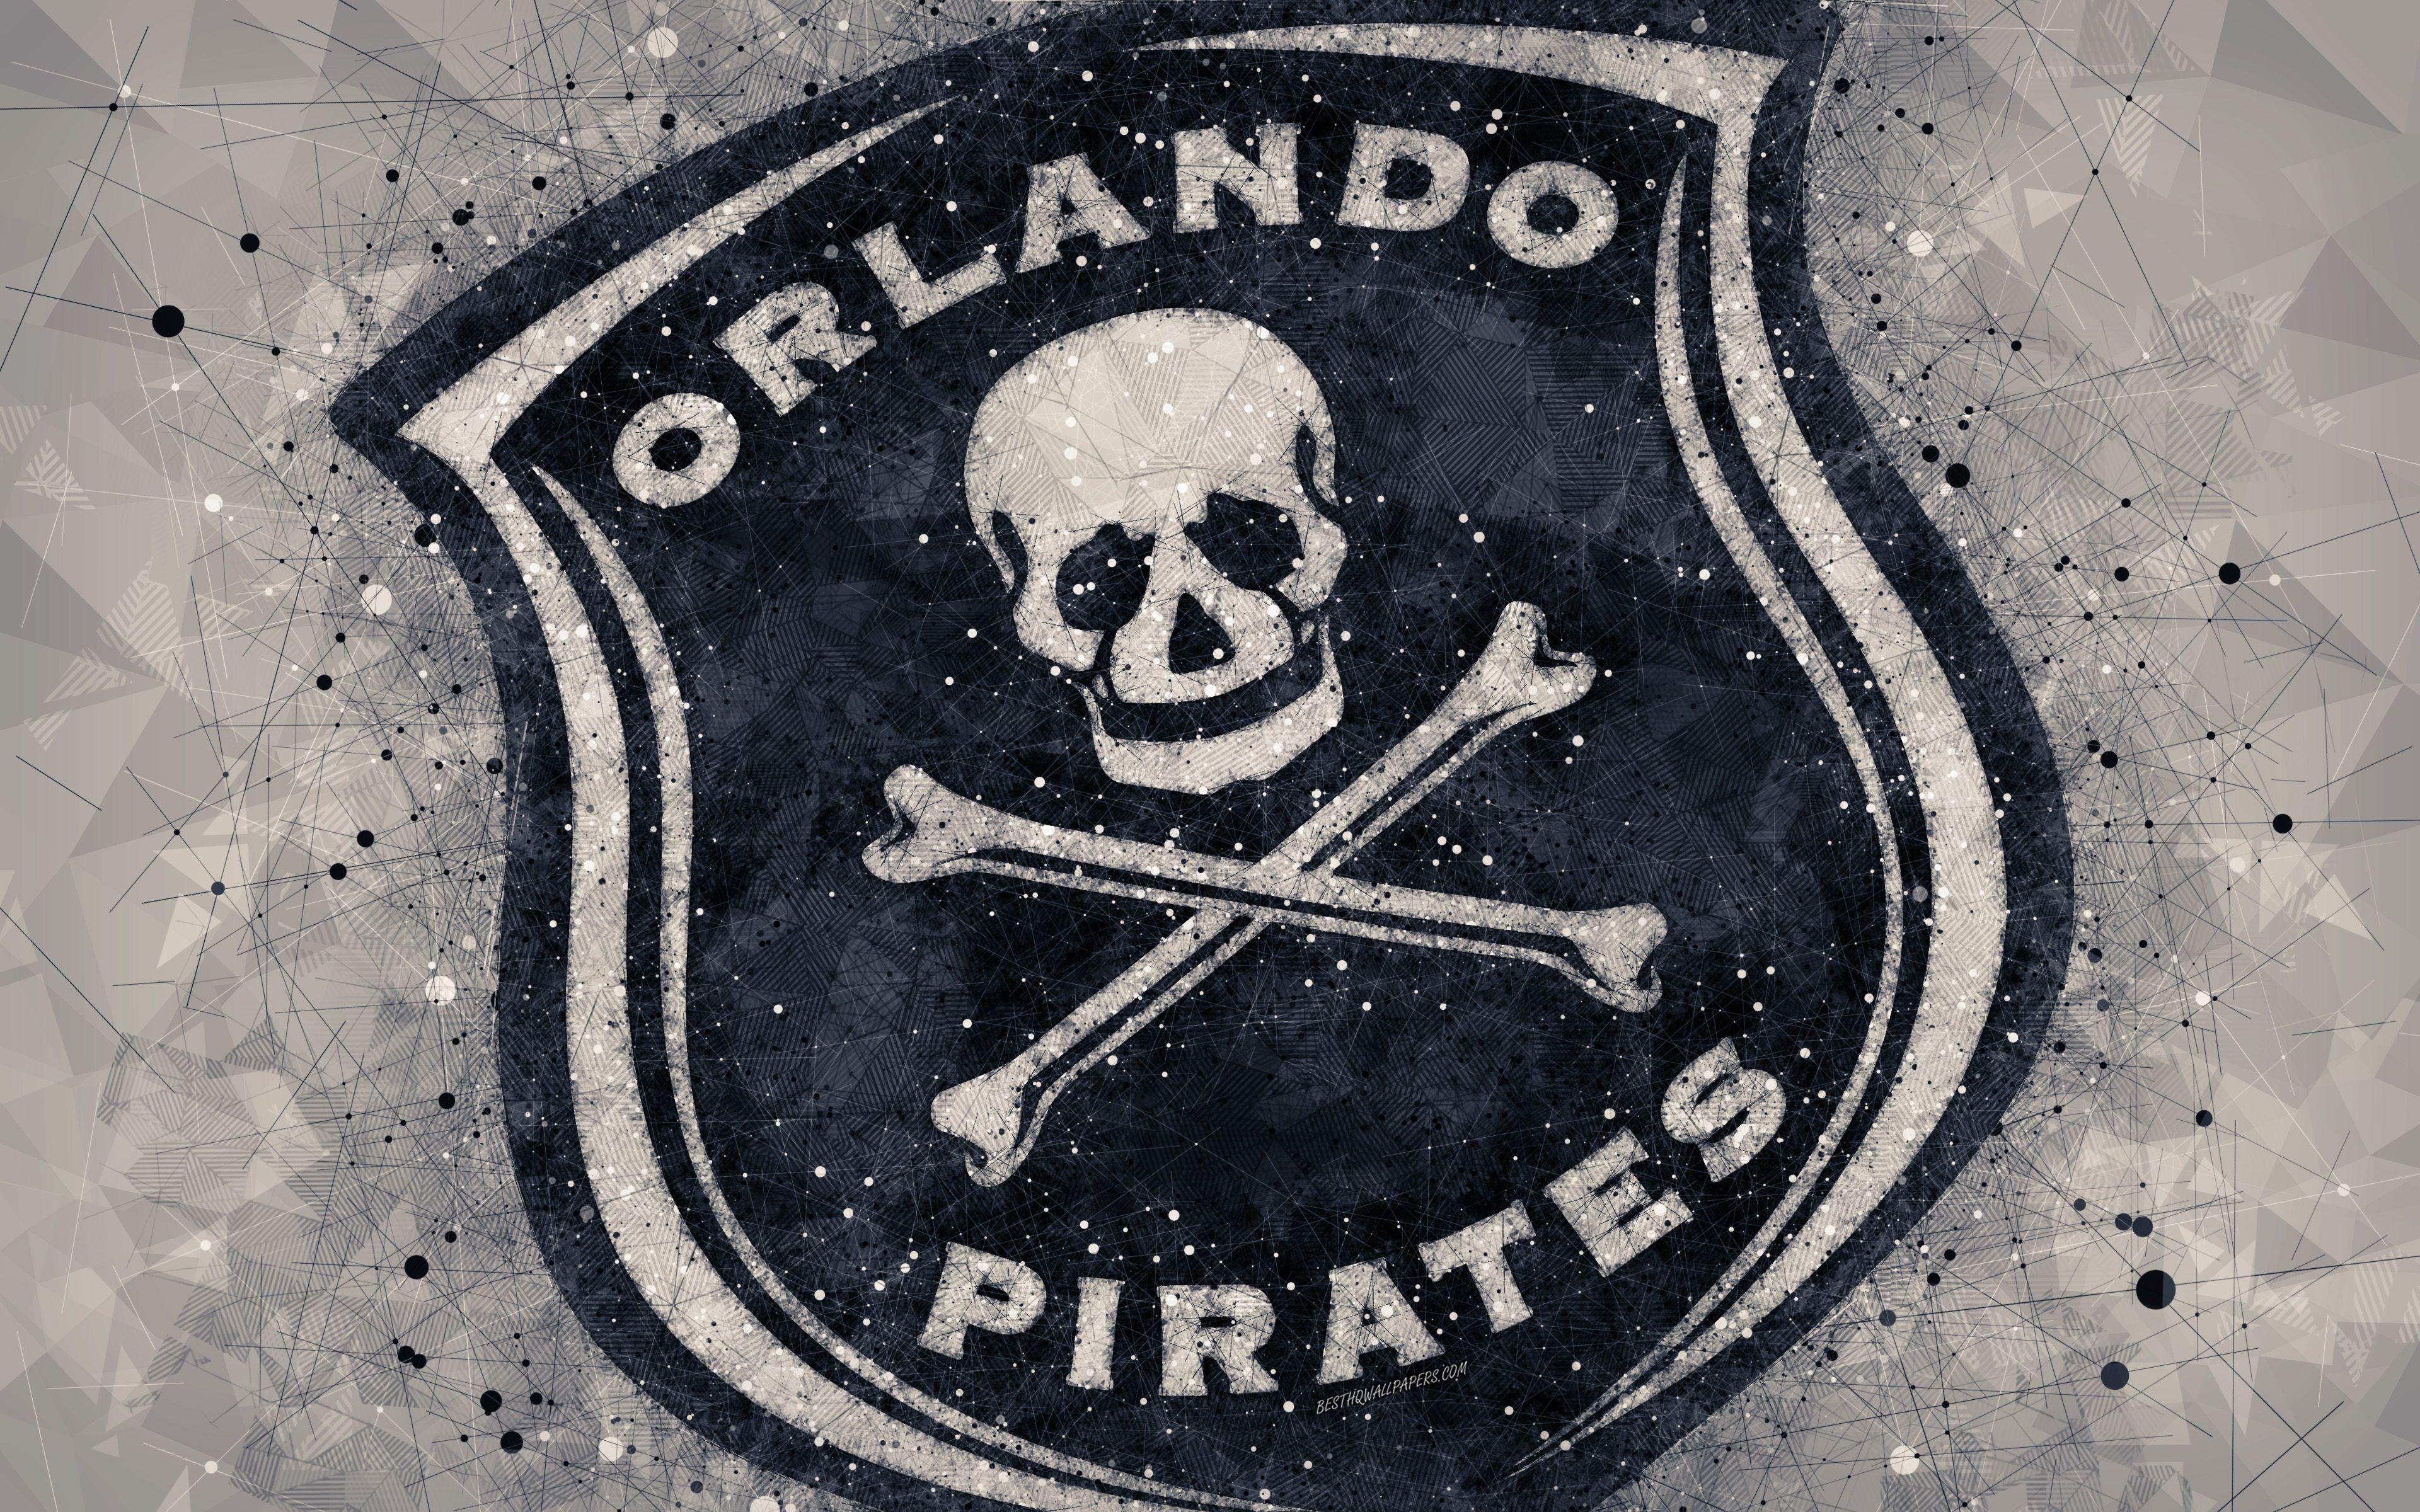 Download wallpaper Orlando Pirates FC, 4k, logo, geometric art